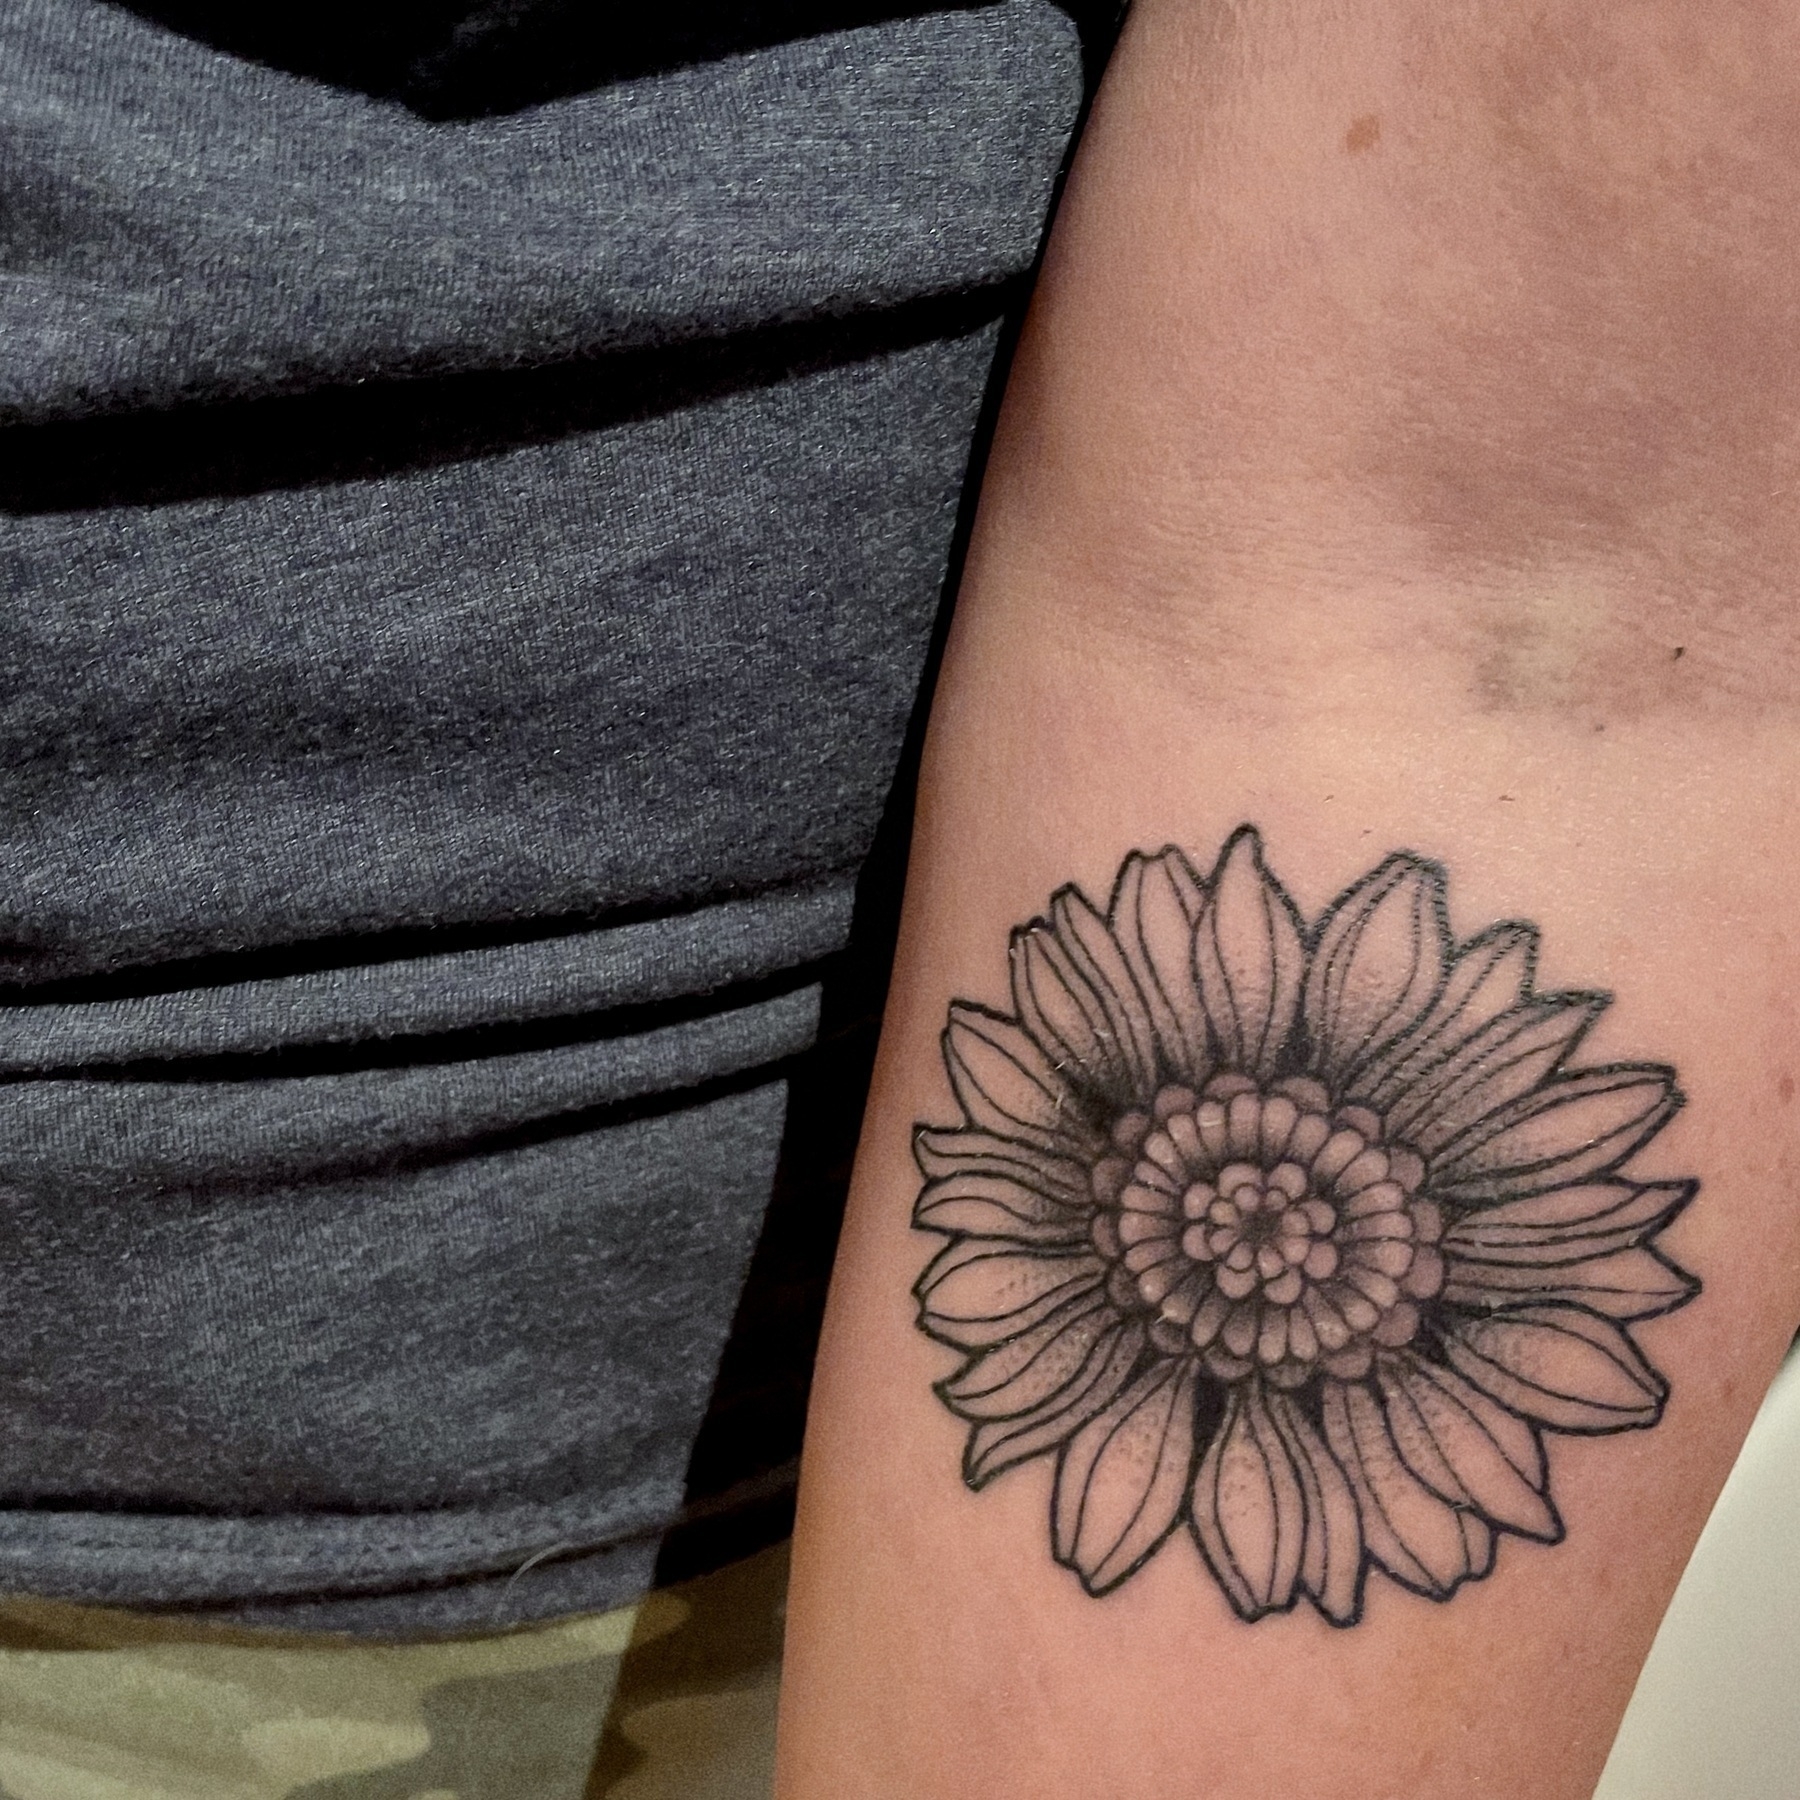 Sunflower tattoo on a woman's forearm